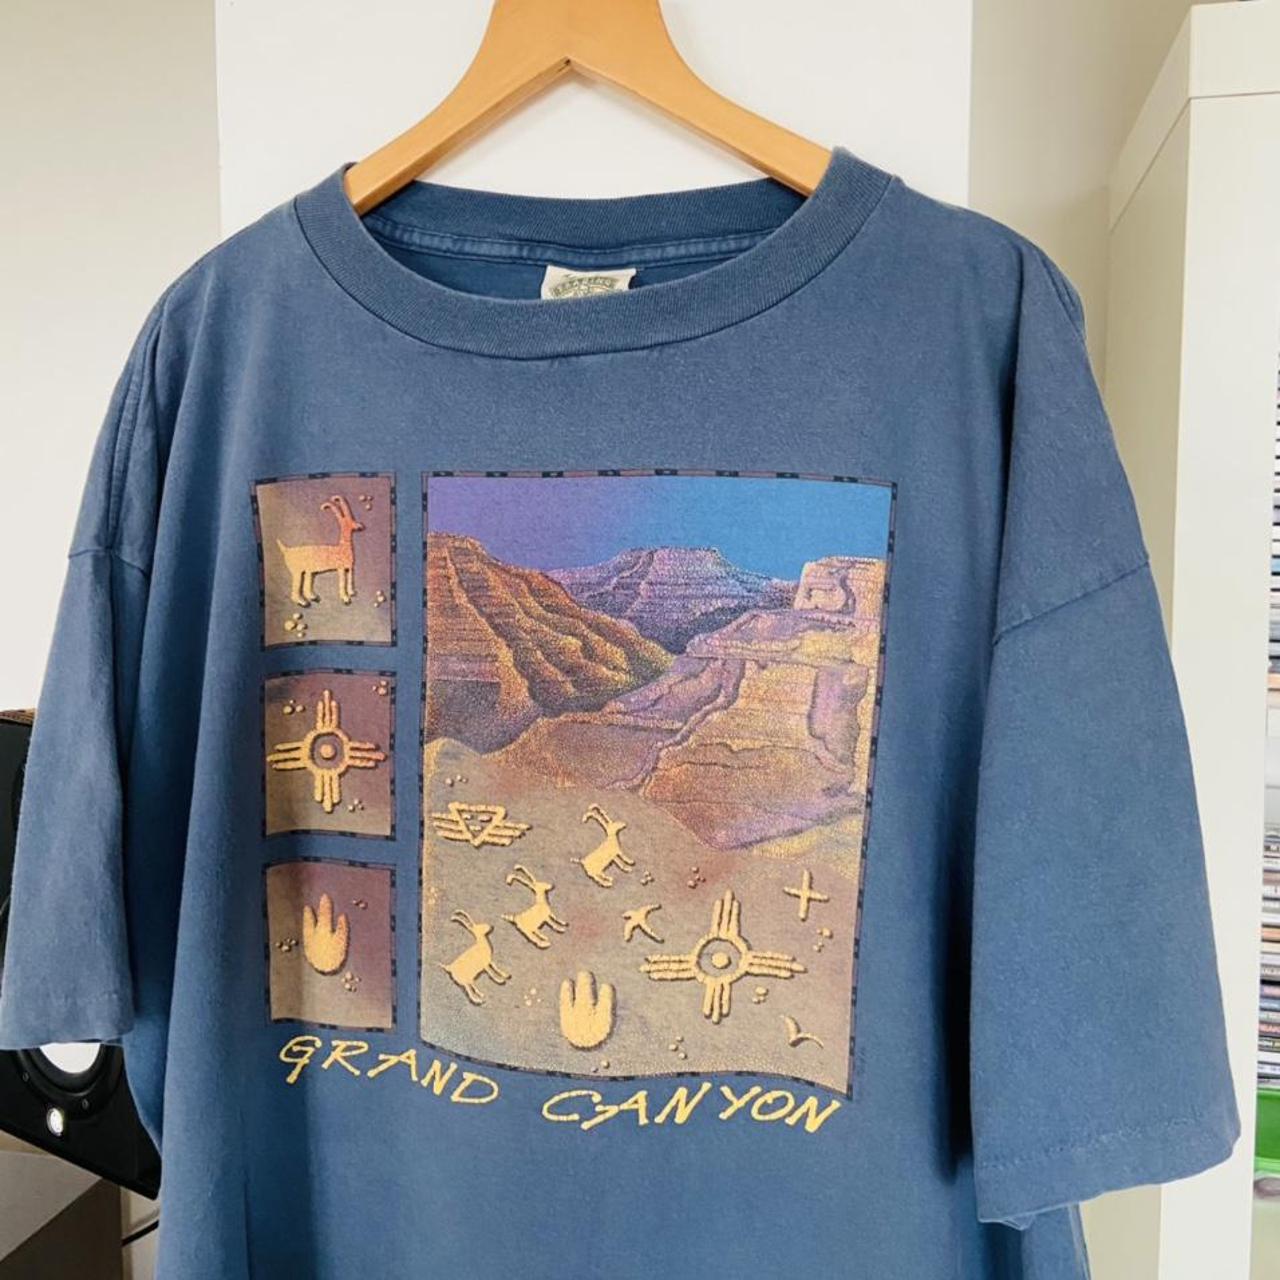 Product Image 2 - Vintage Grand Canyon T Shirt

I